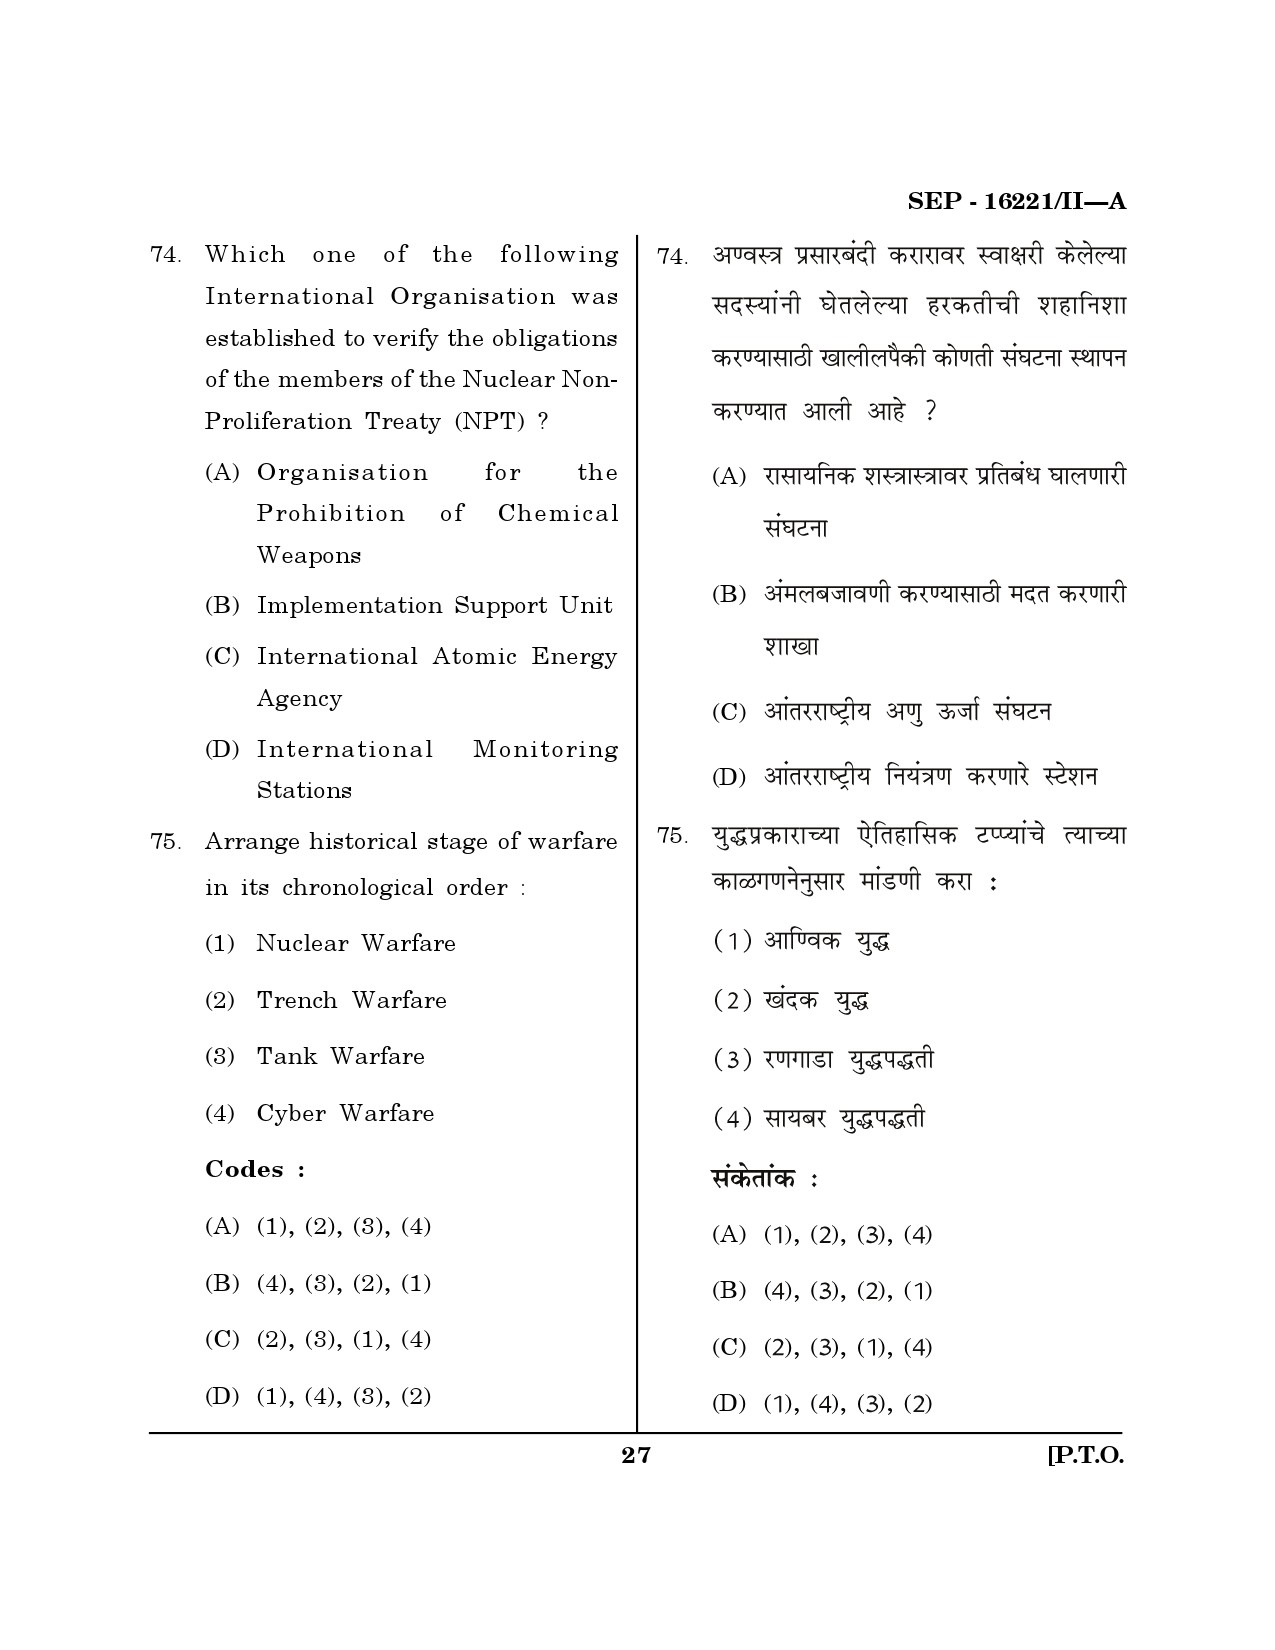 Maharashtra SET Defence and Strategic Studies Exam Question Paper September 2021 26